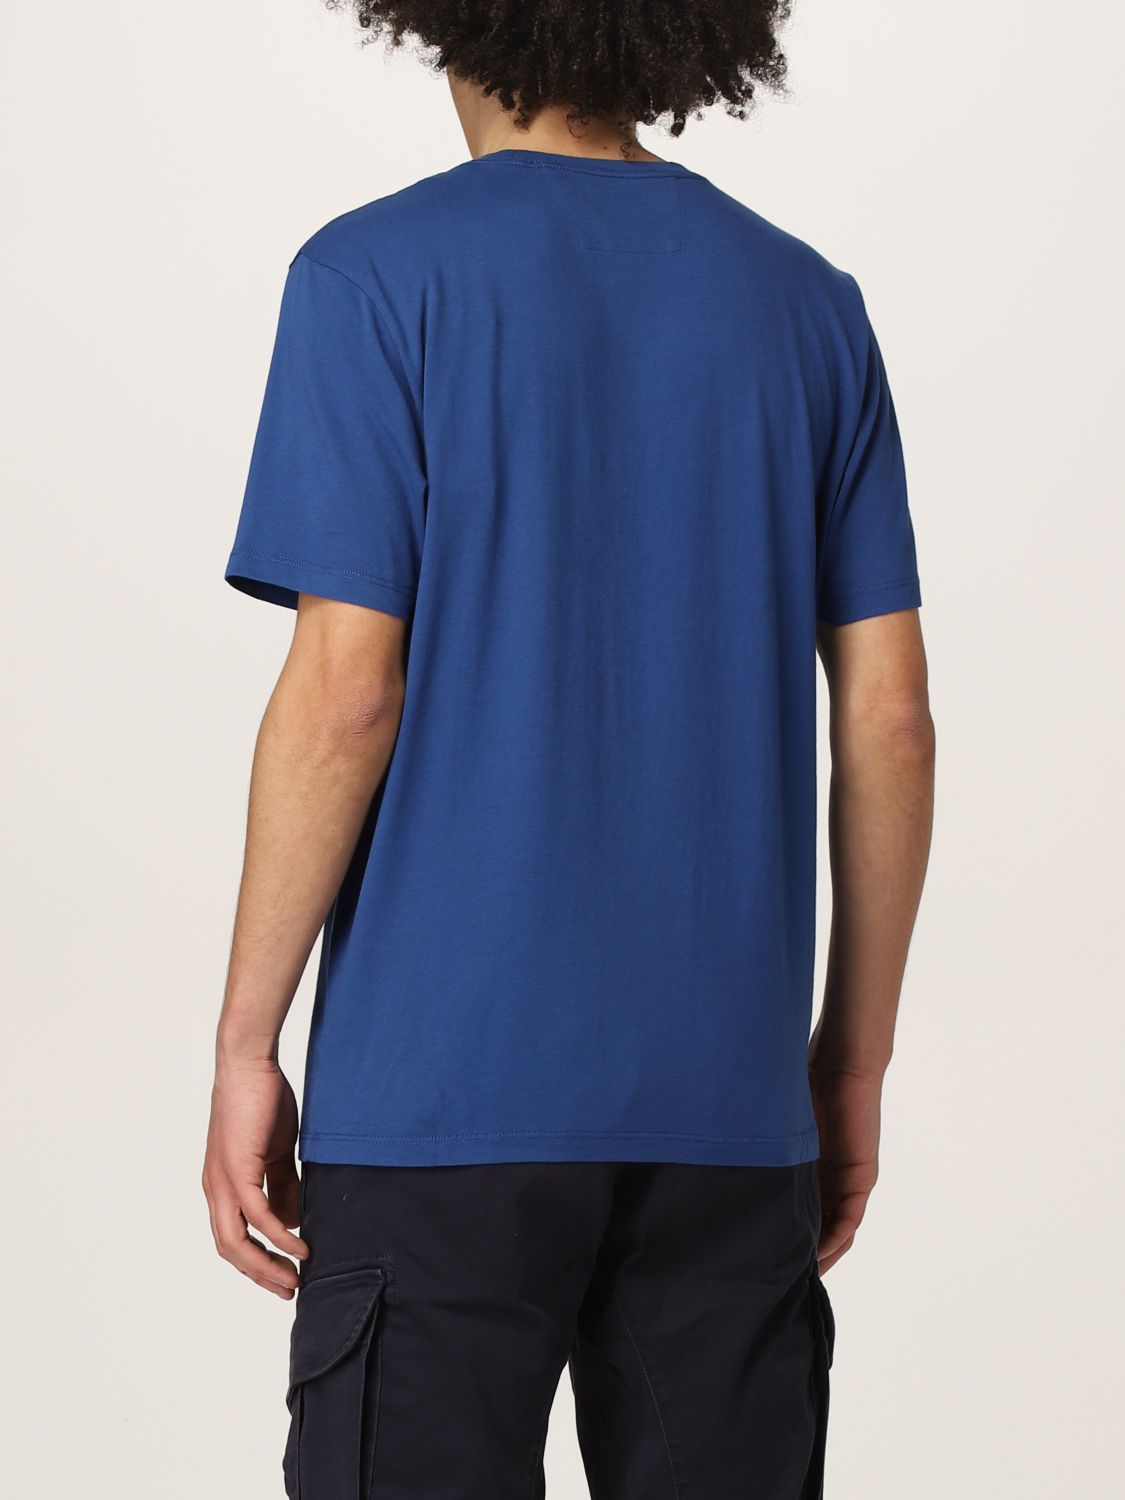 C.P Company Undersixteen Royal Blue Blue Contrast Polo Shirt 